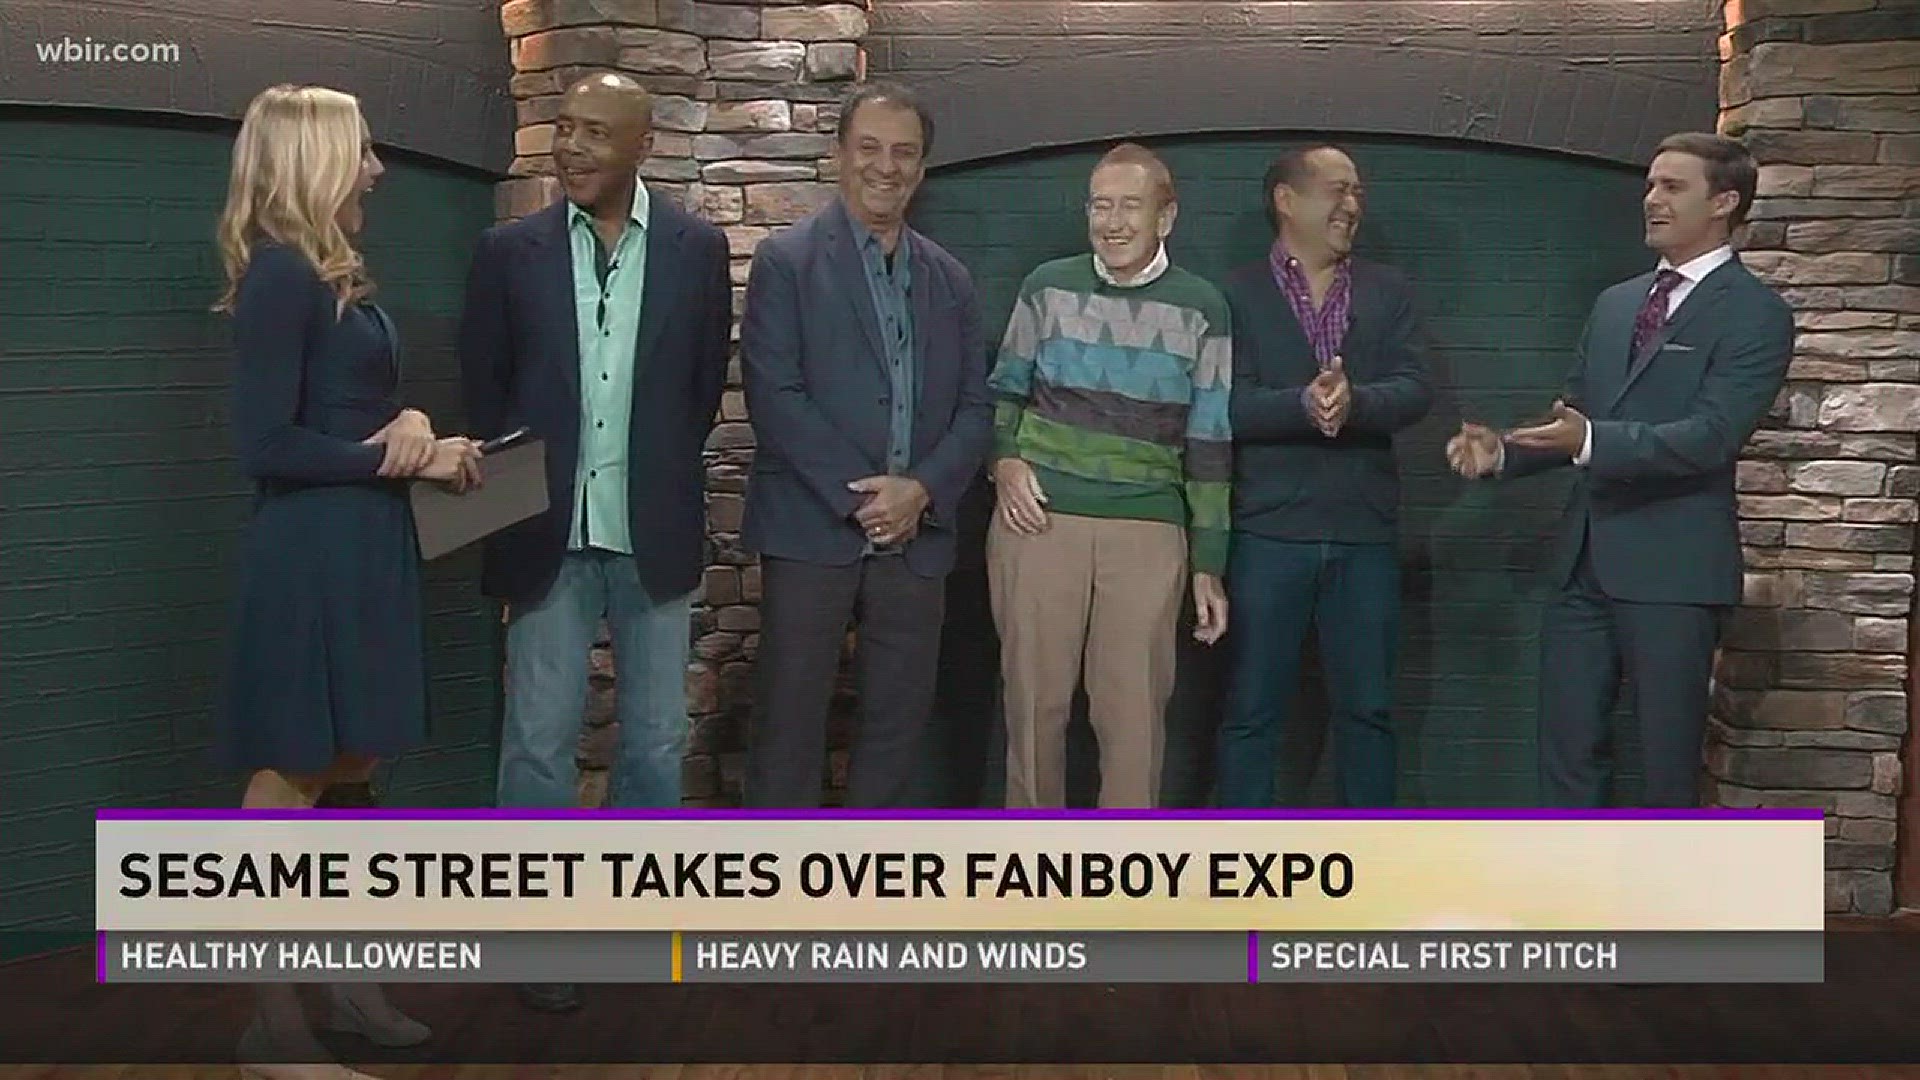 The Sesame Street crew visits WBIR ahead of their Fanboy appearance.